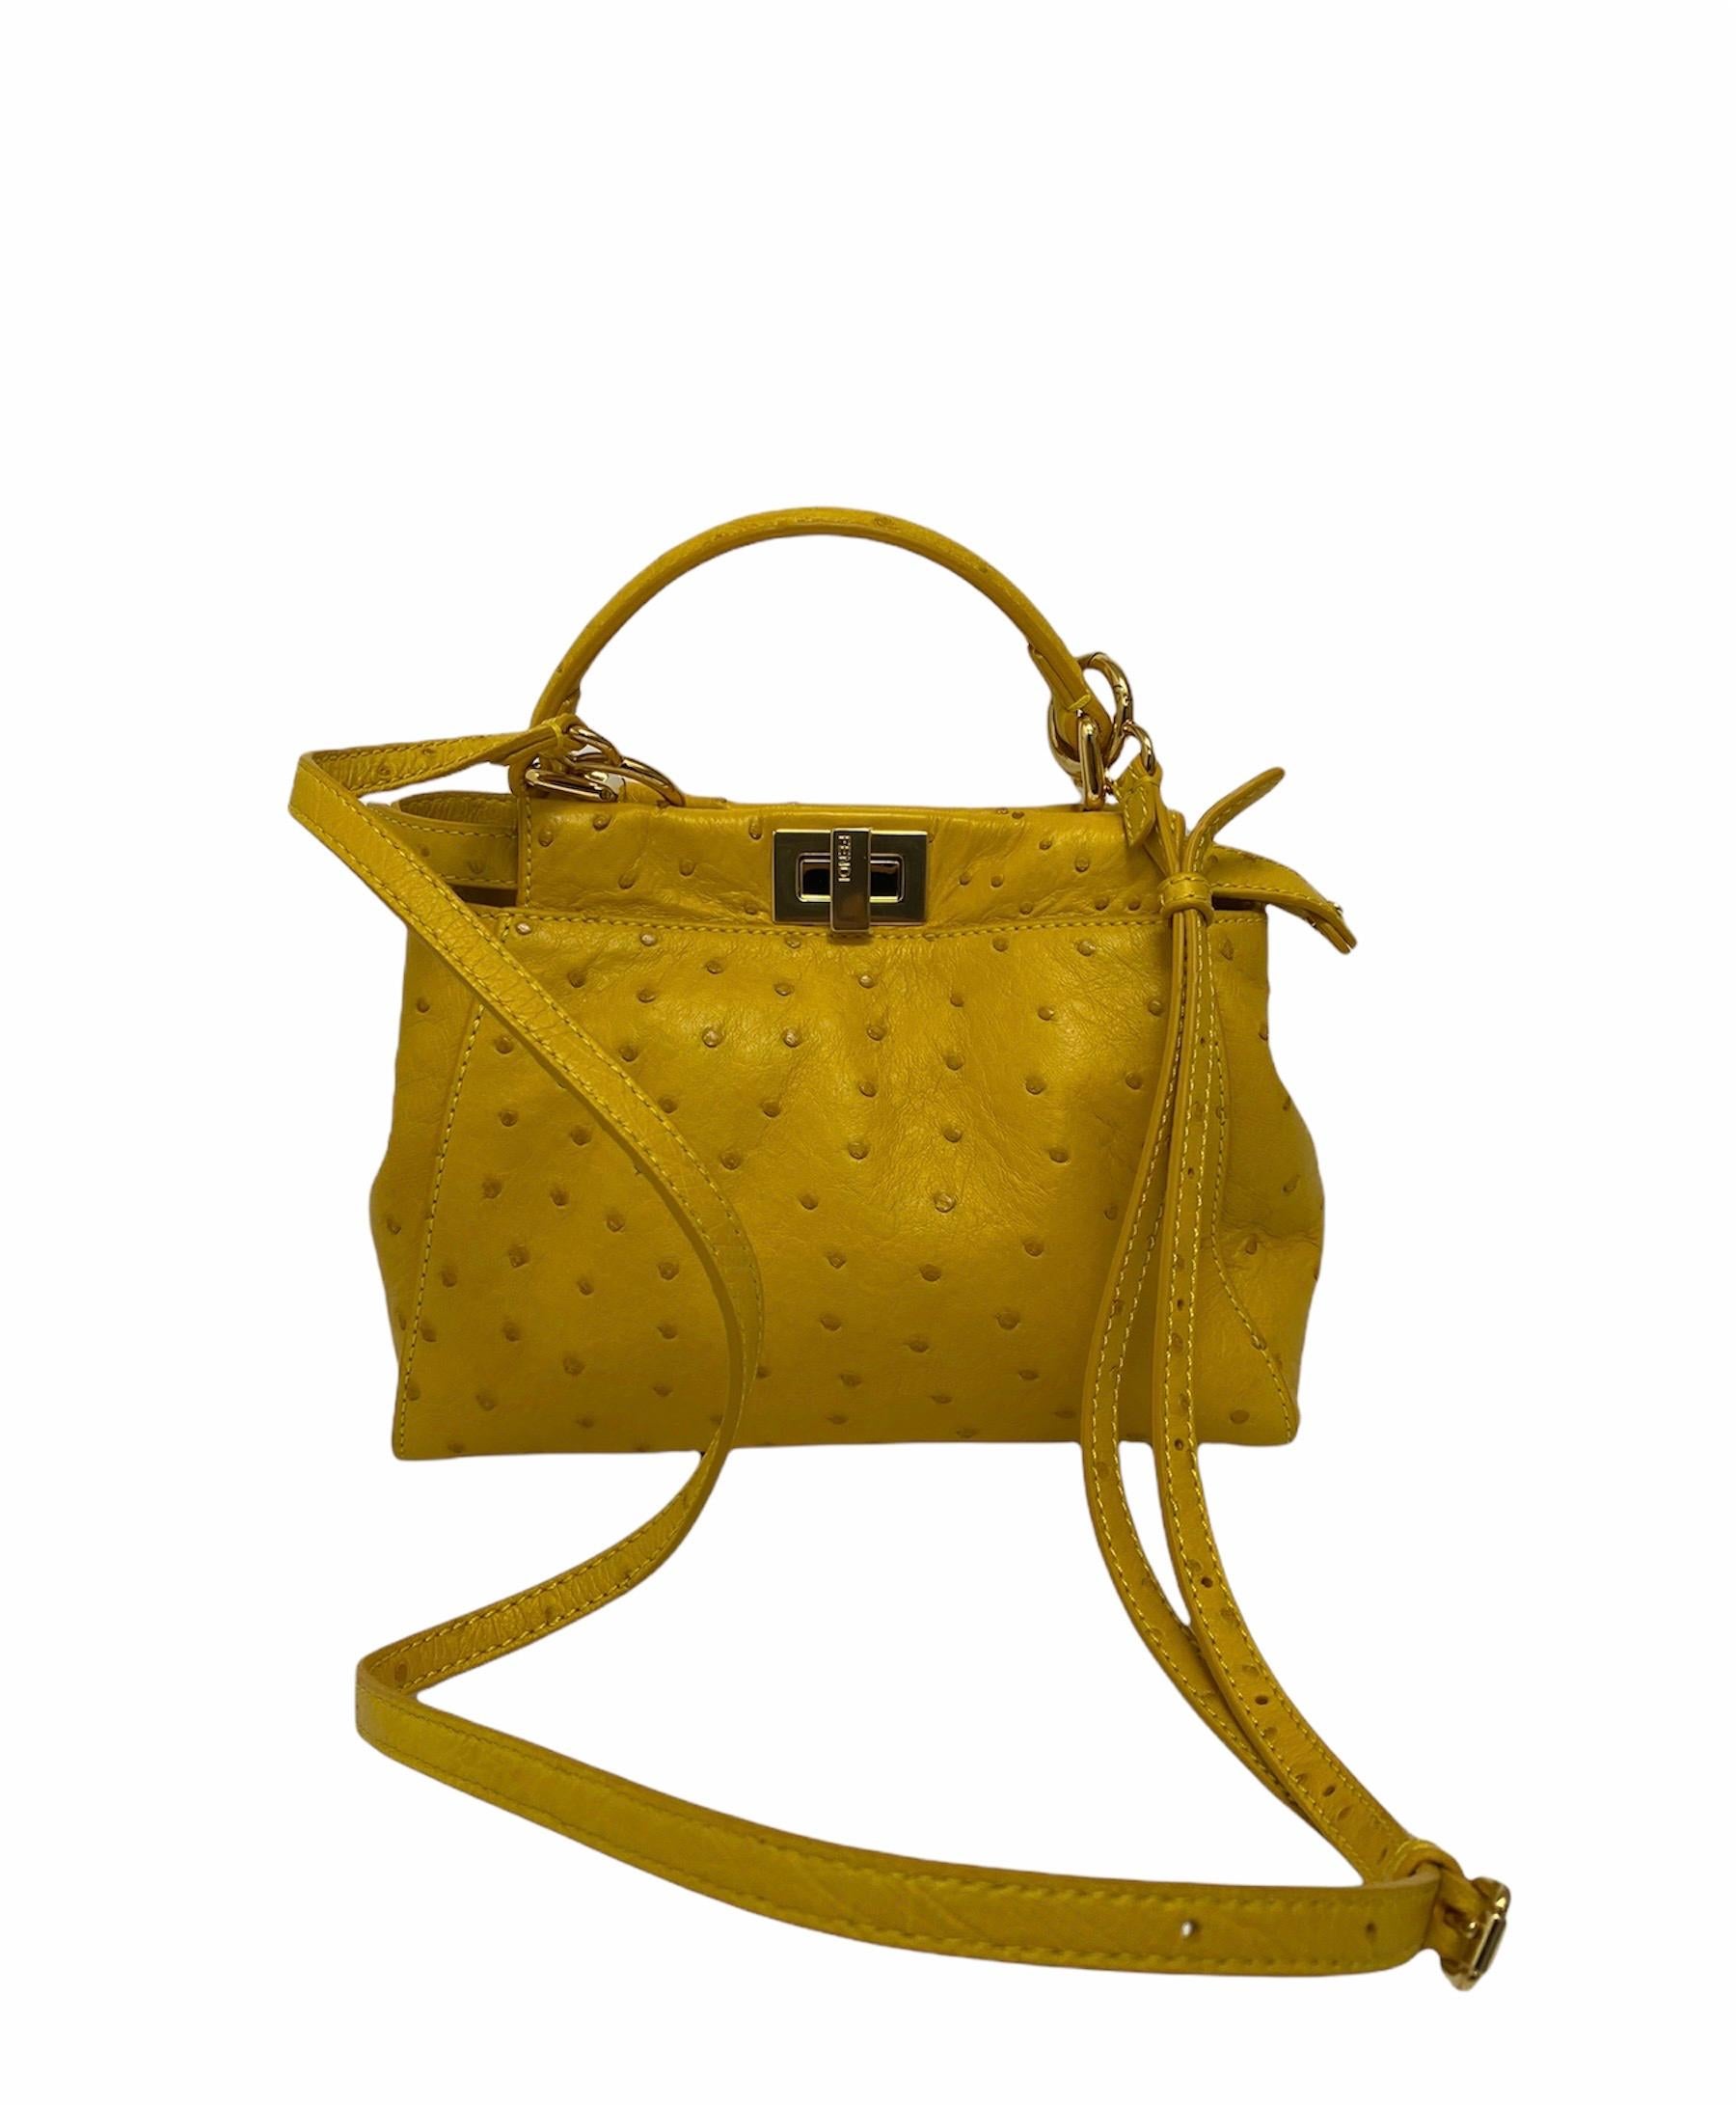 yellow leather bag